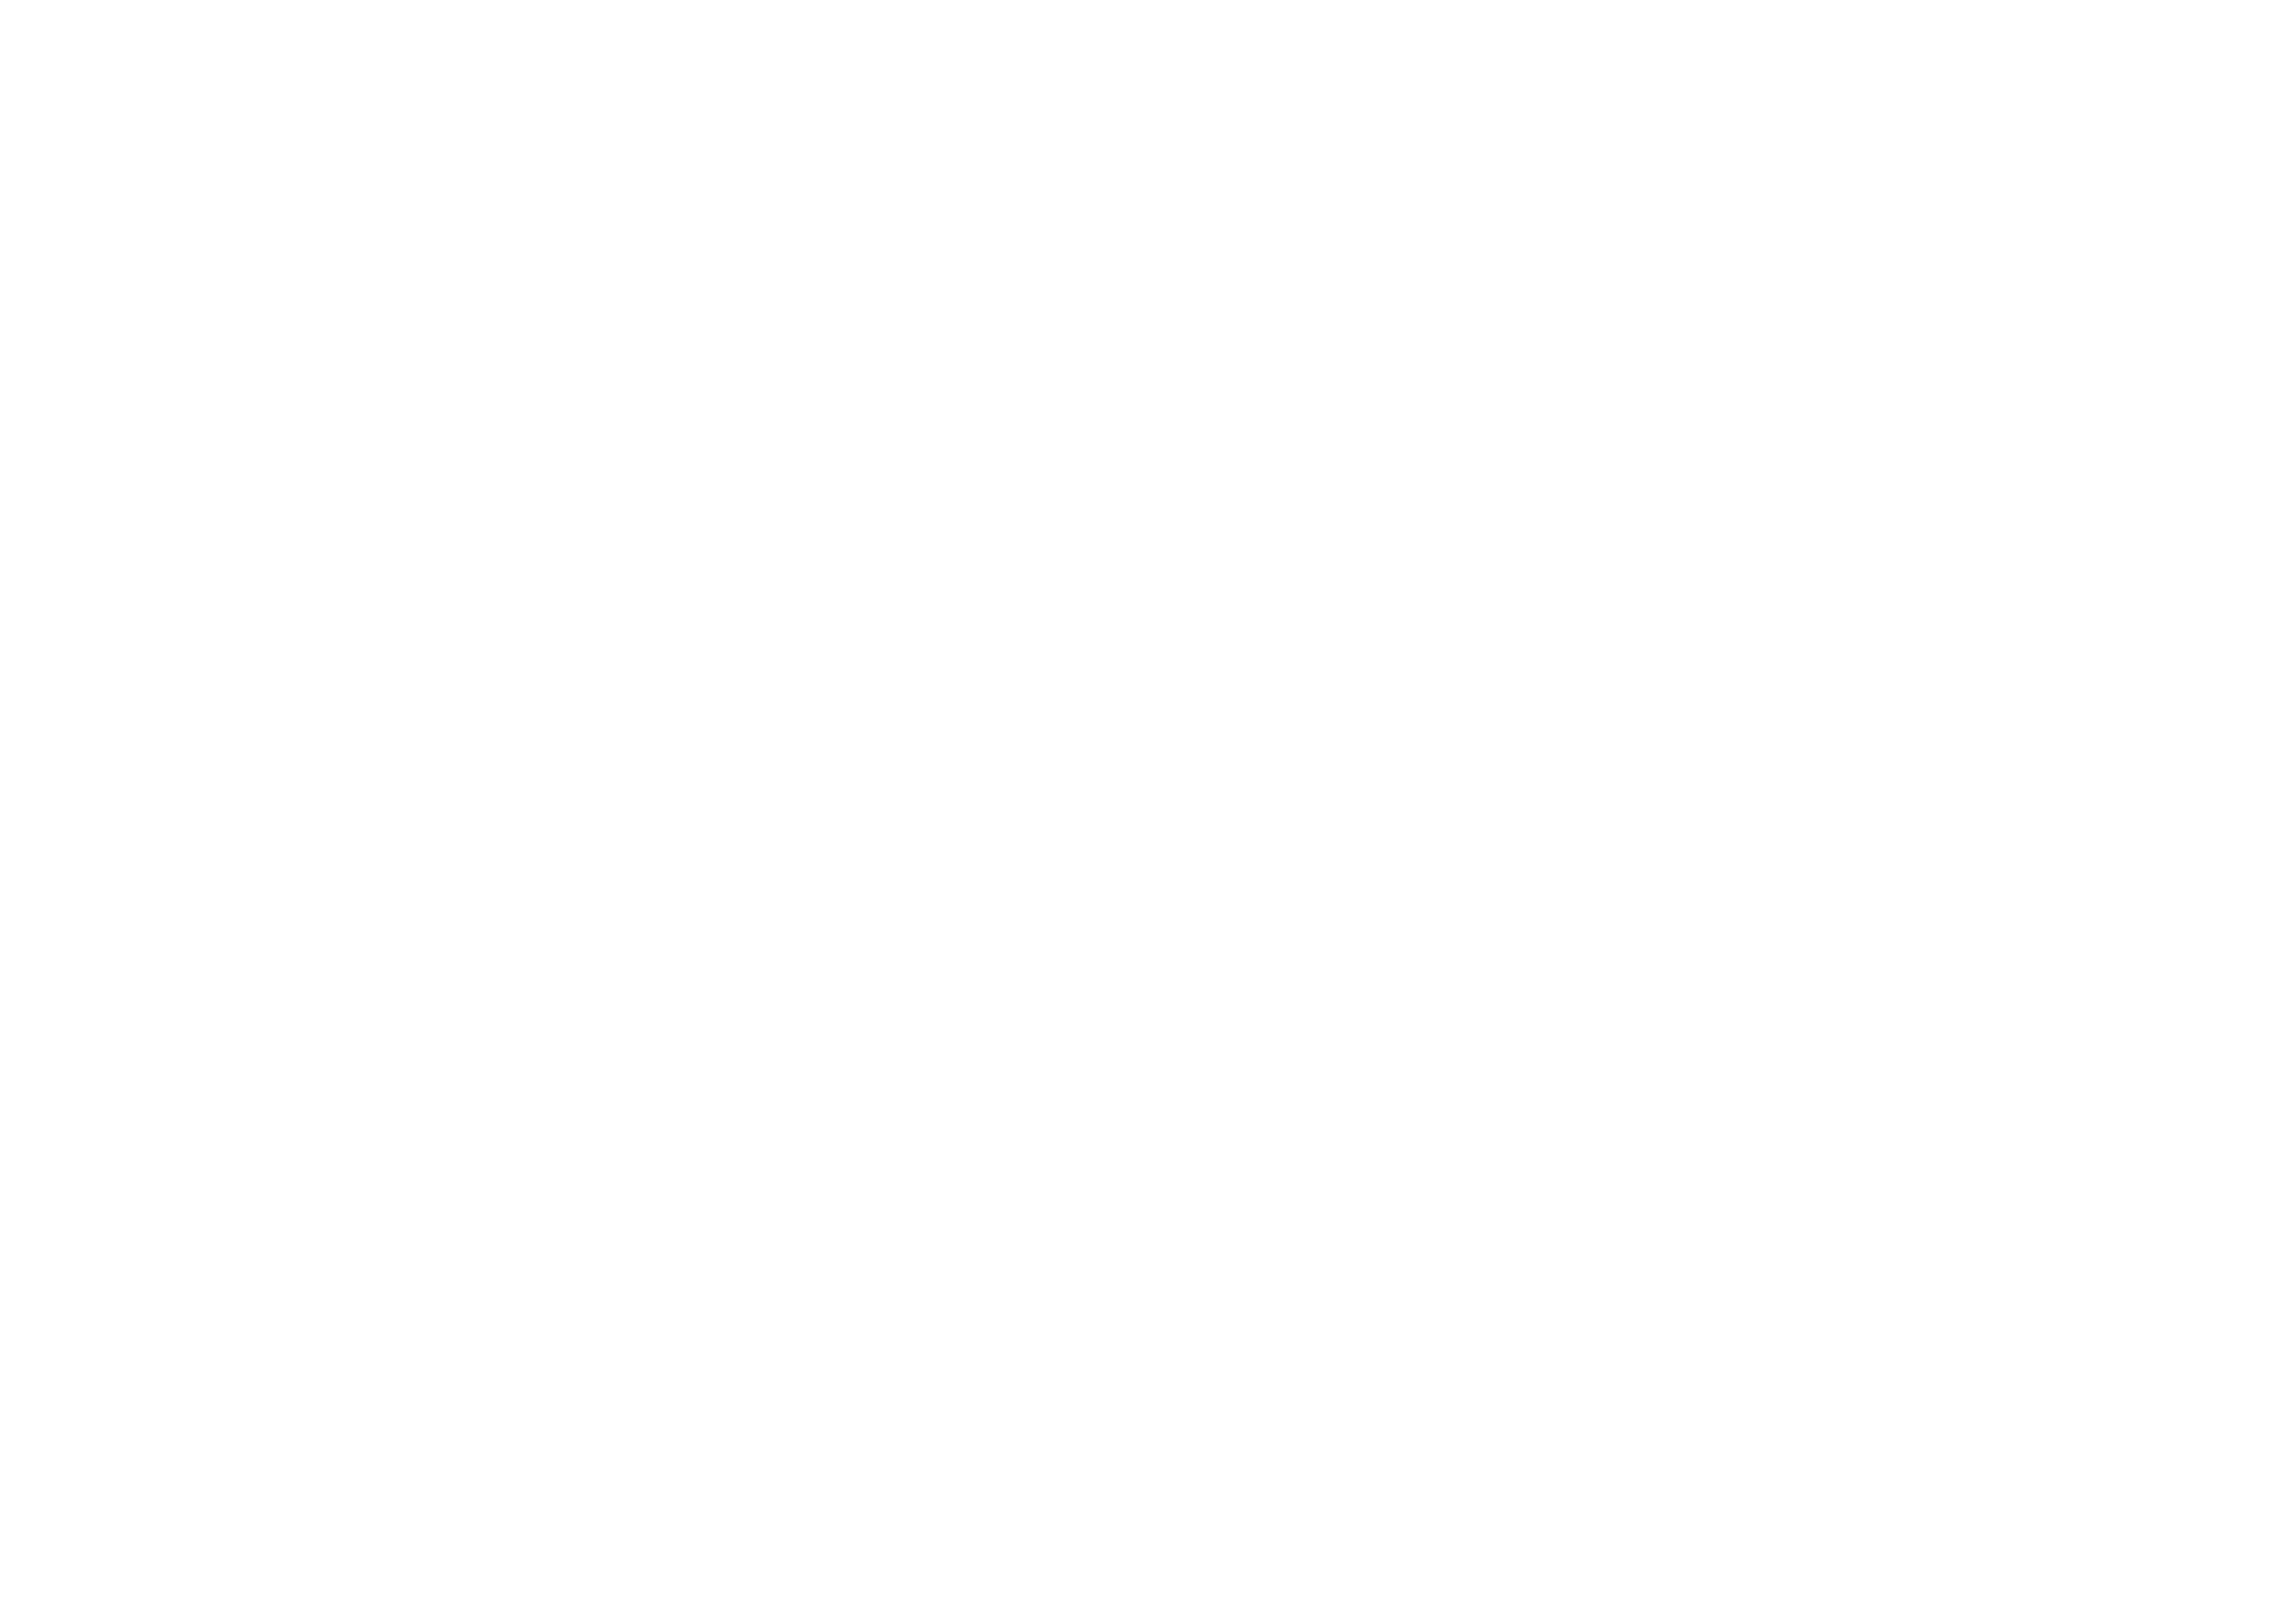 LEGO Serious Play training